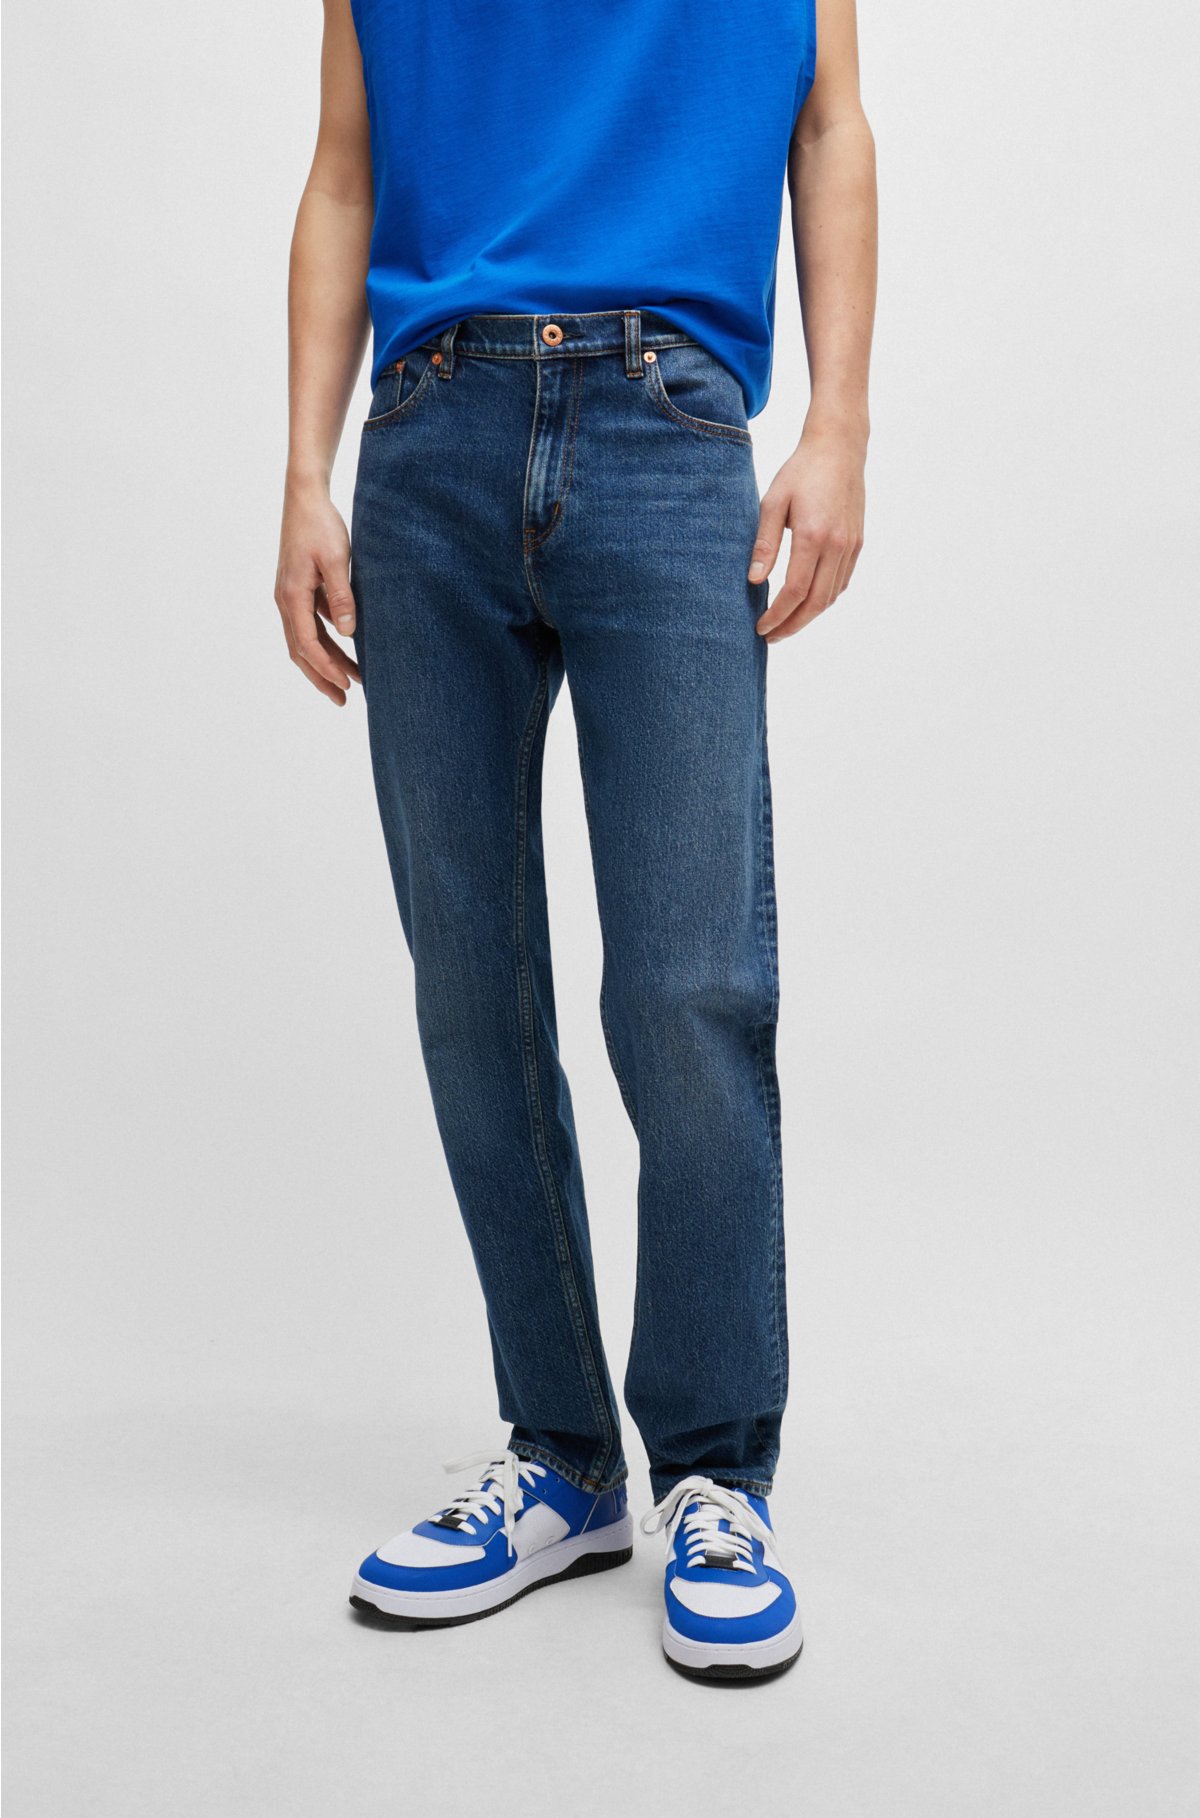 HUGO - Slim-fit jeans in navy stonewashed stretch denim